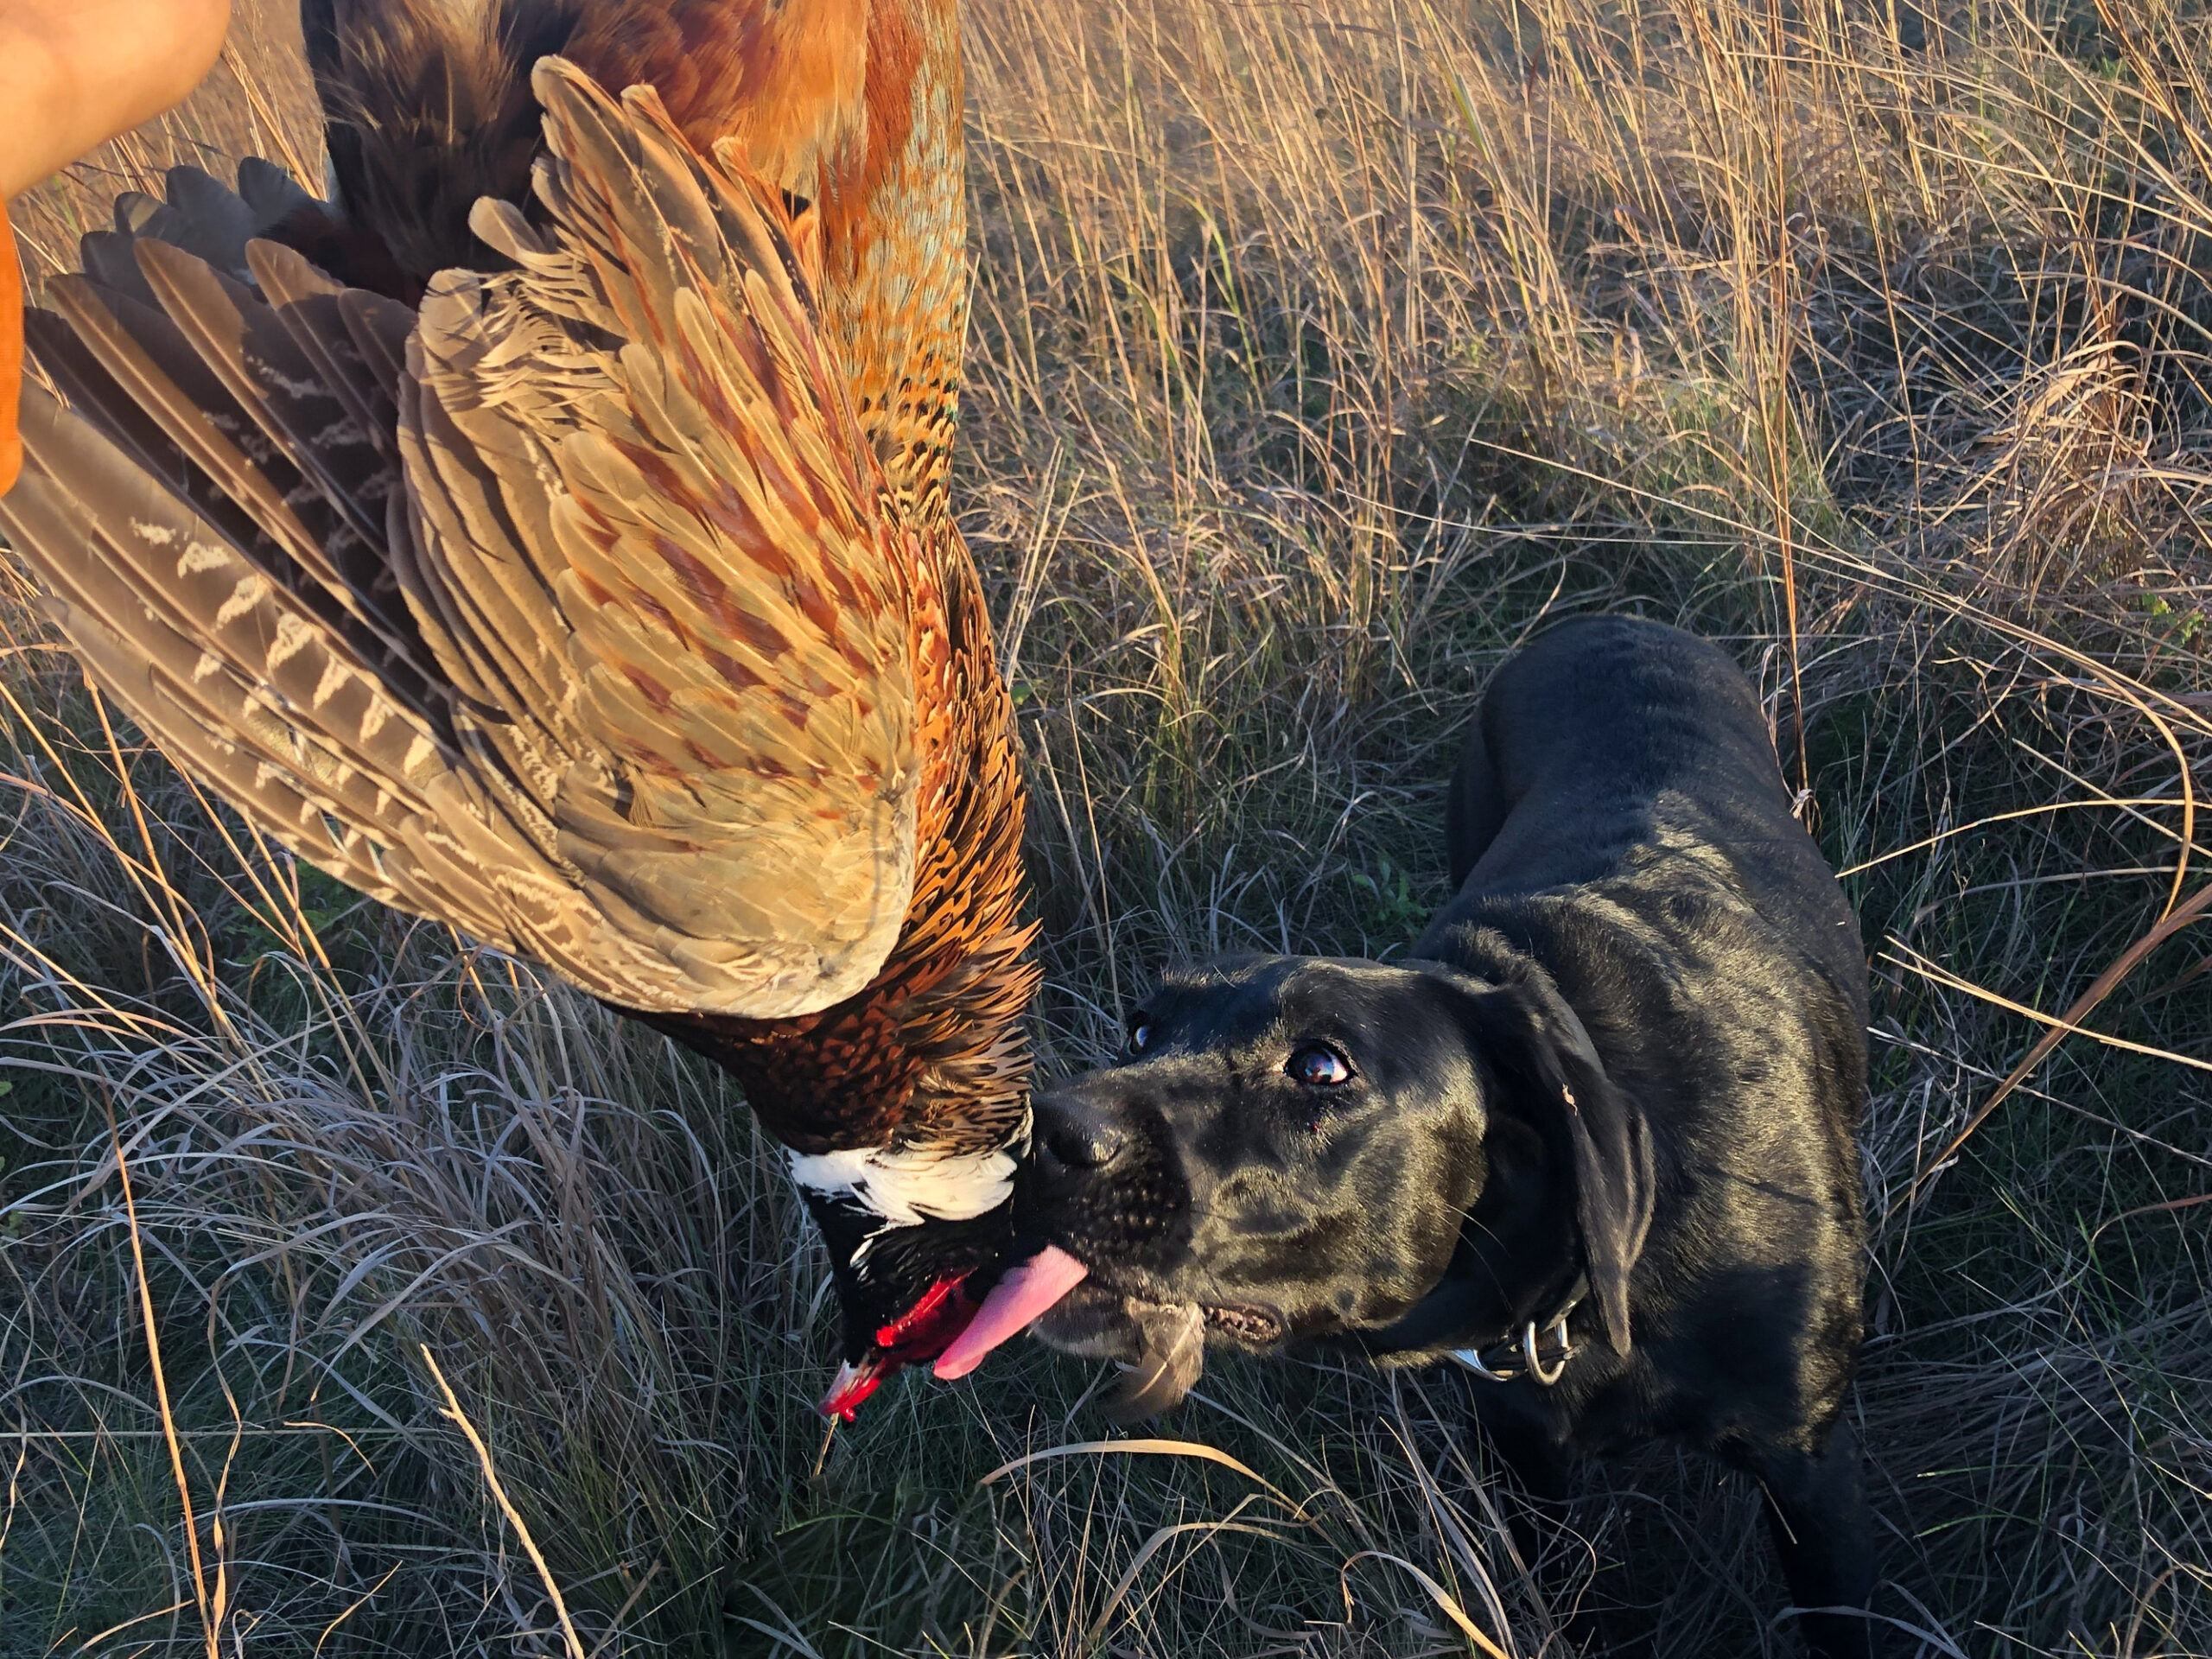 A black Labrador licks a pheasant.